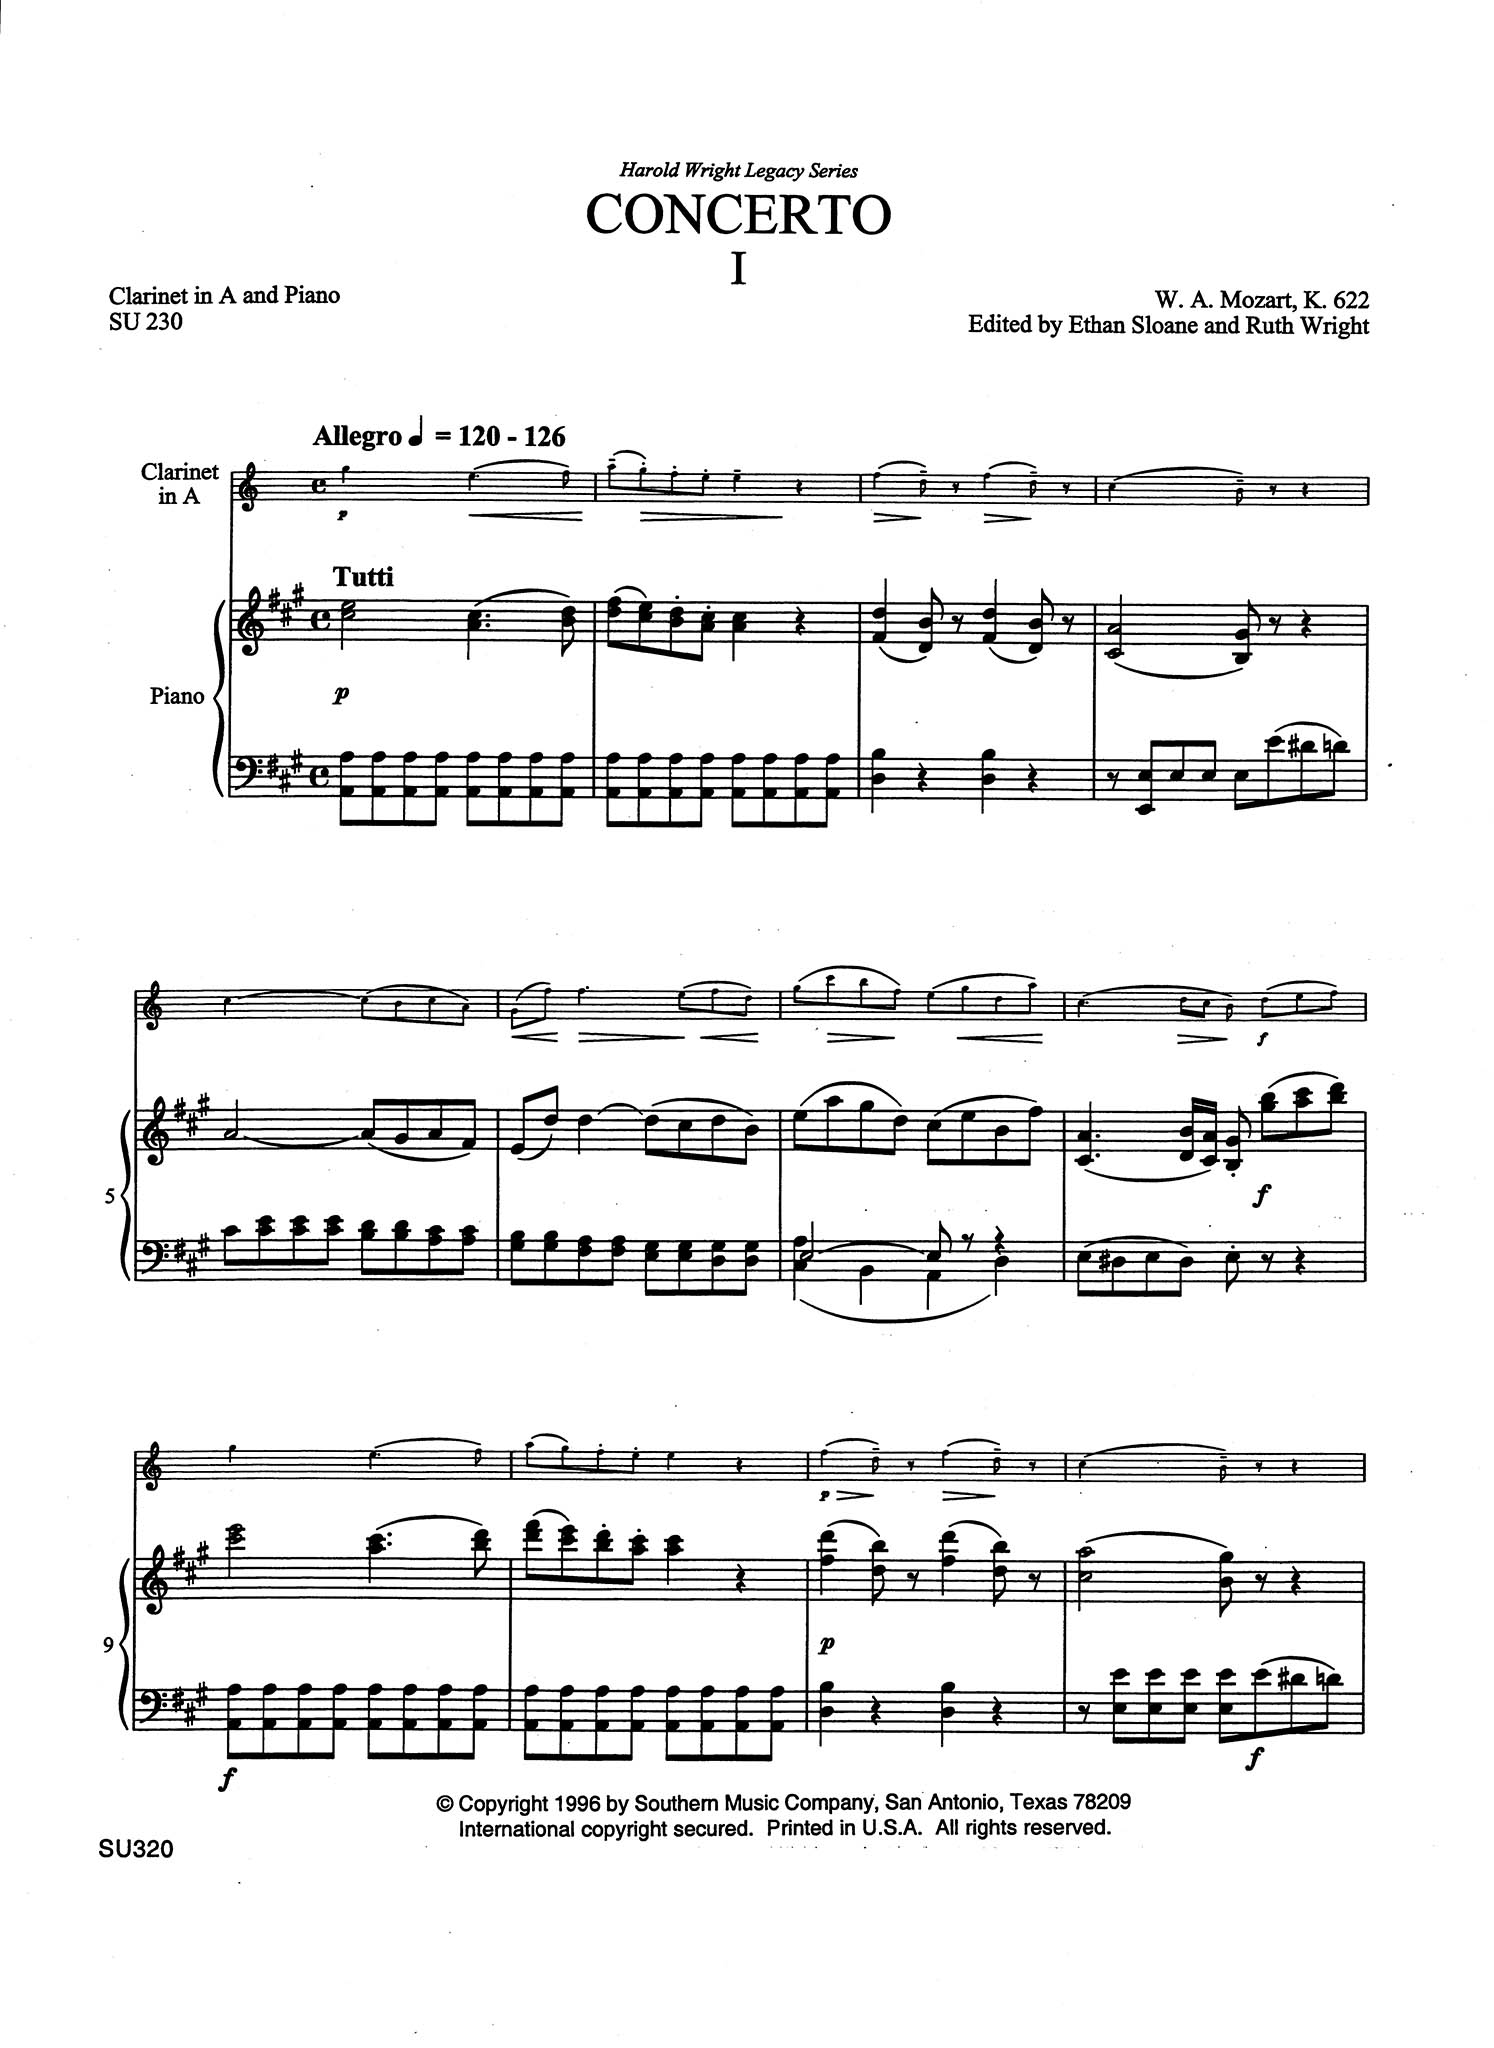 Clarinet Concerto in A Major, K. 622 - Movement 1